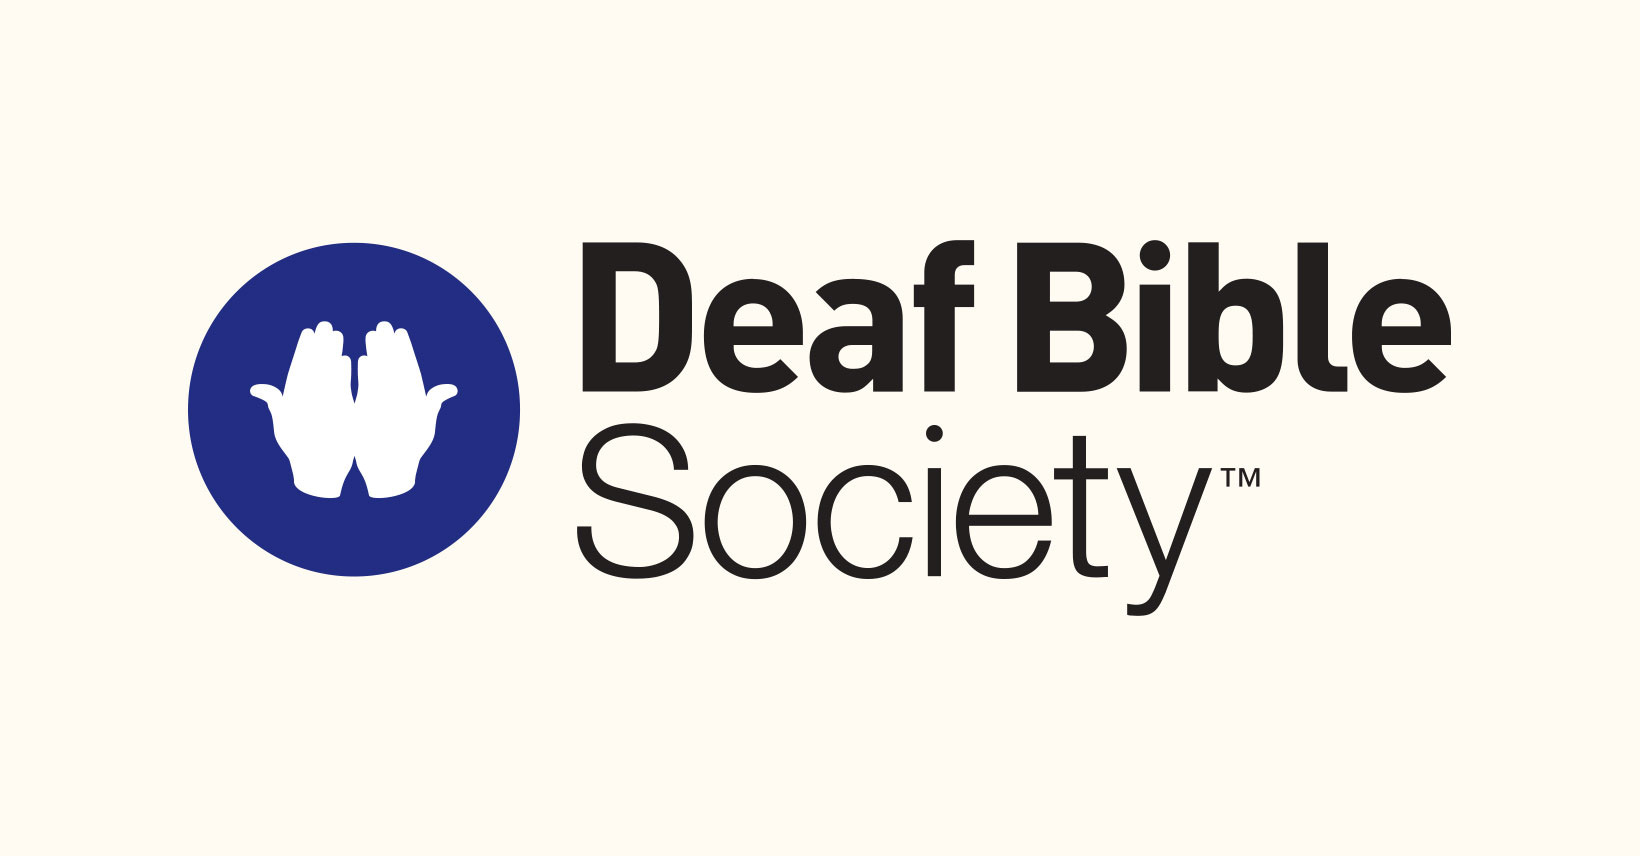 (c) Deafbiblesociety.com